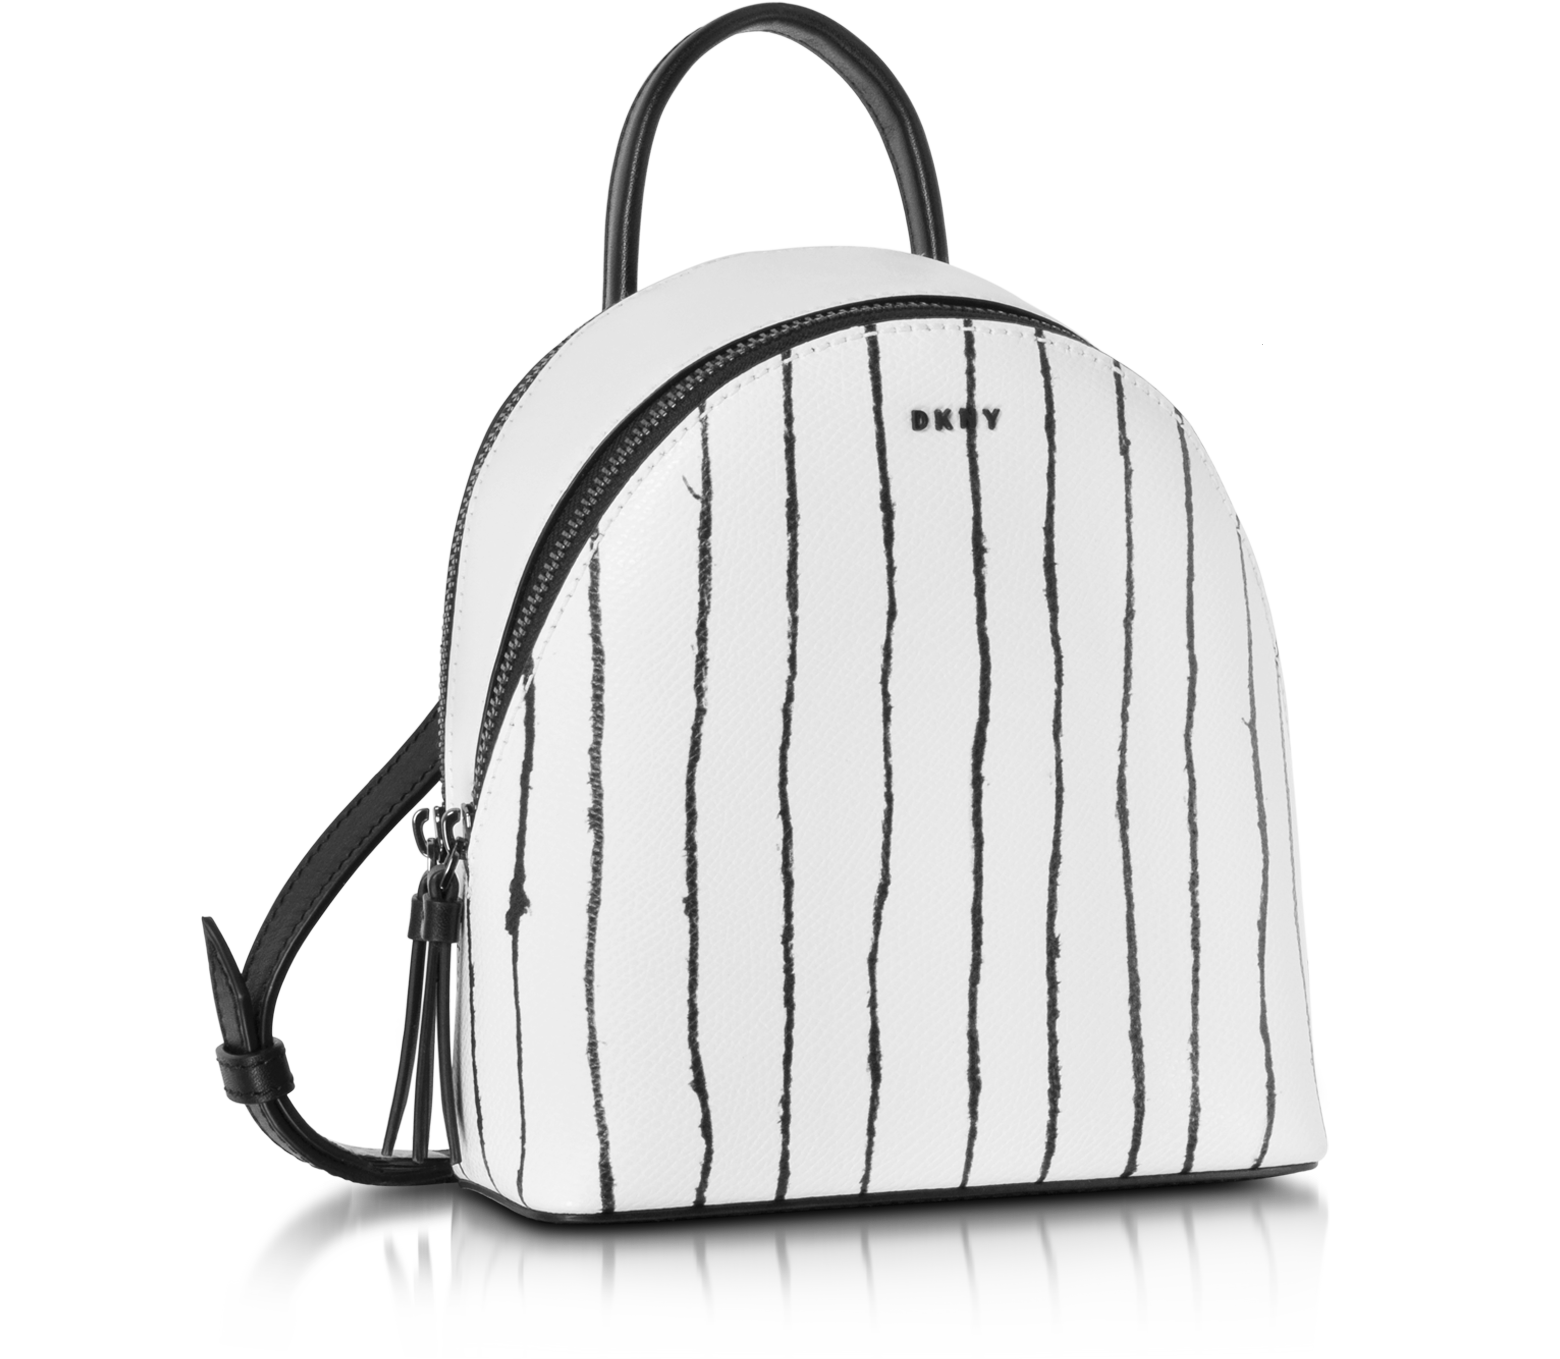 DKNY Twine Stripe Leather Mini Backpack at FORZIERI